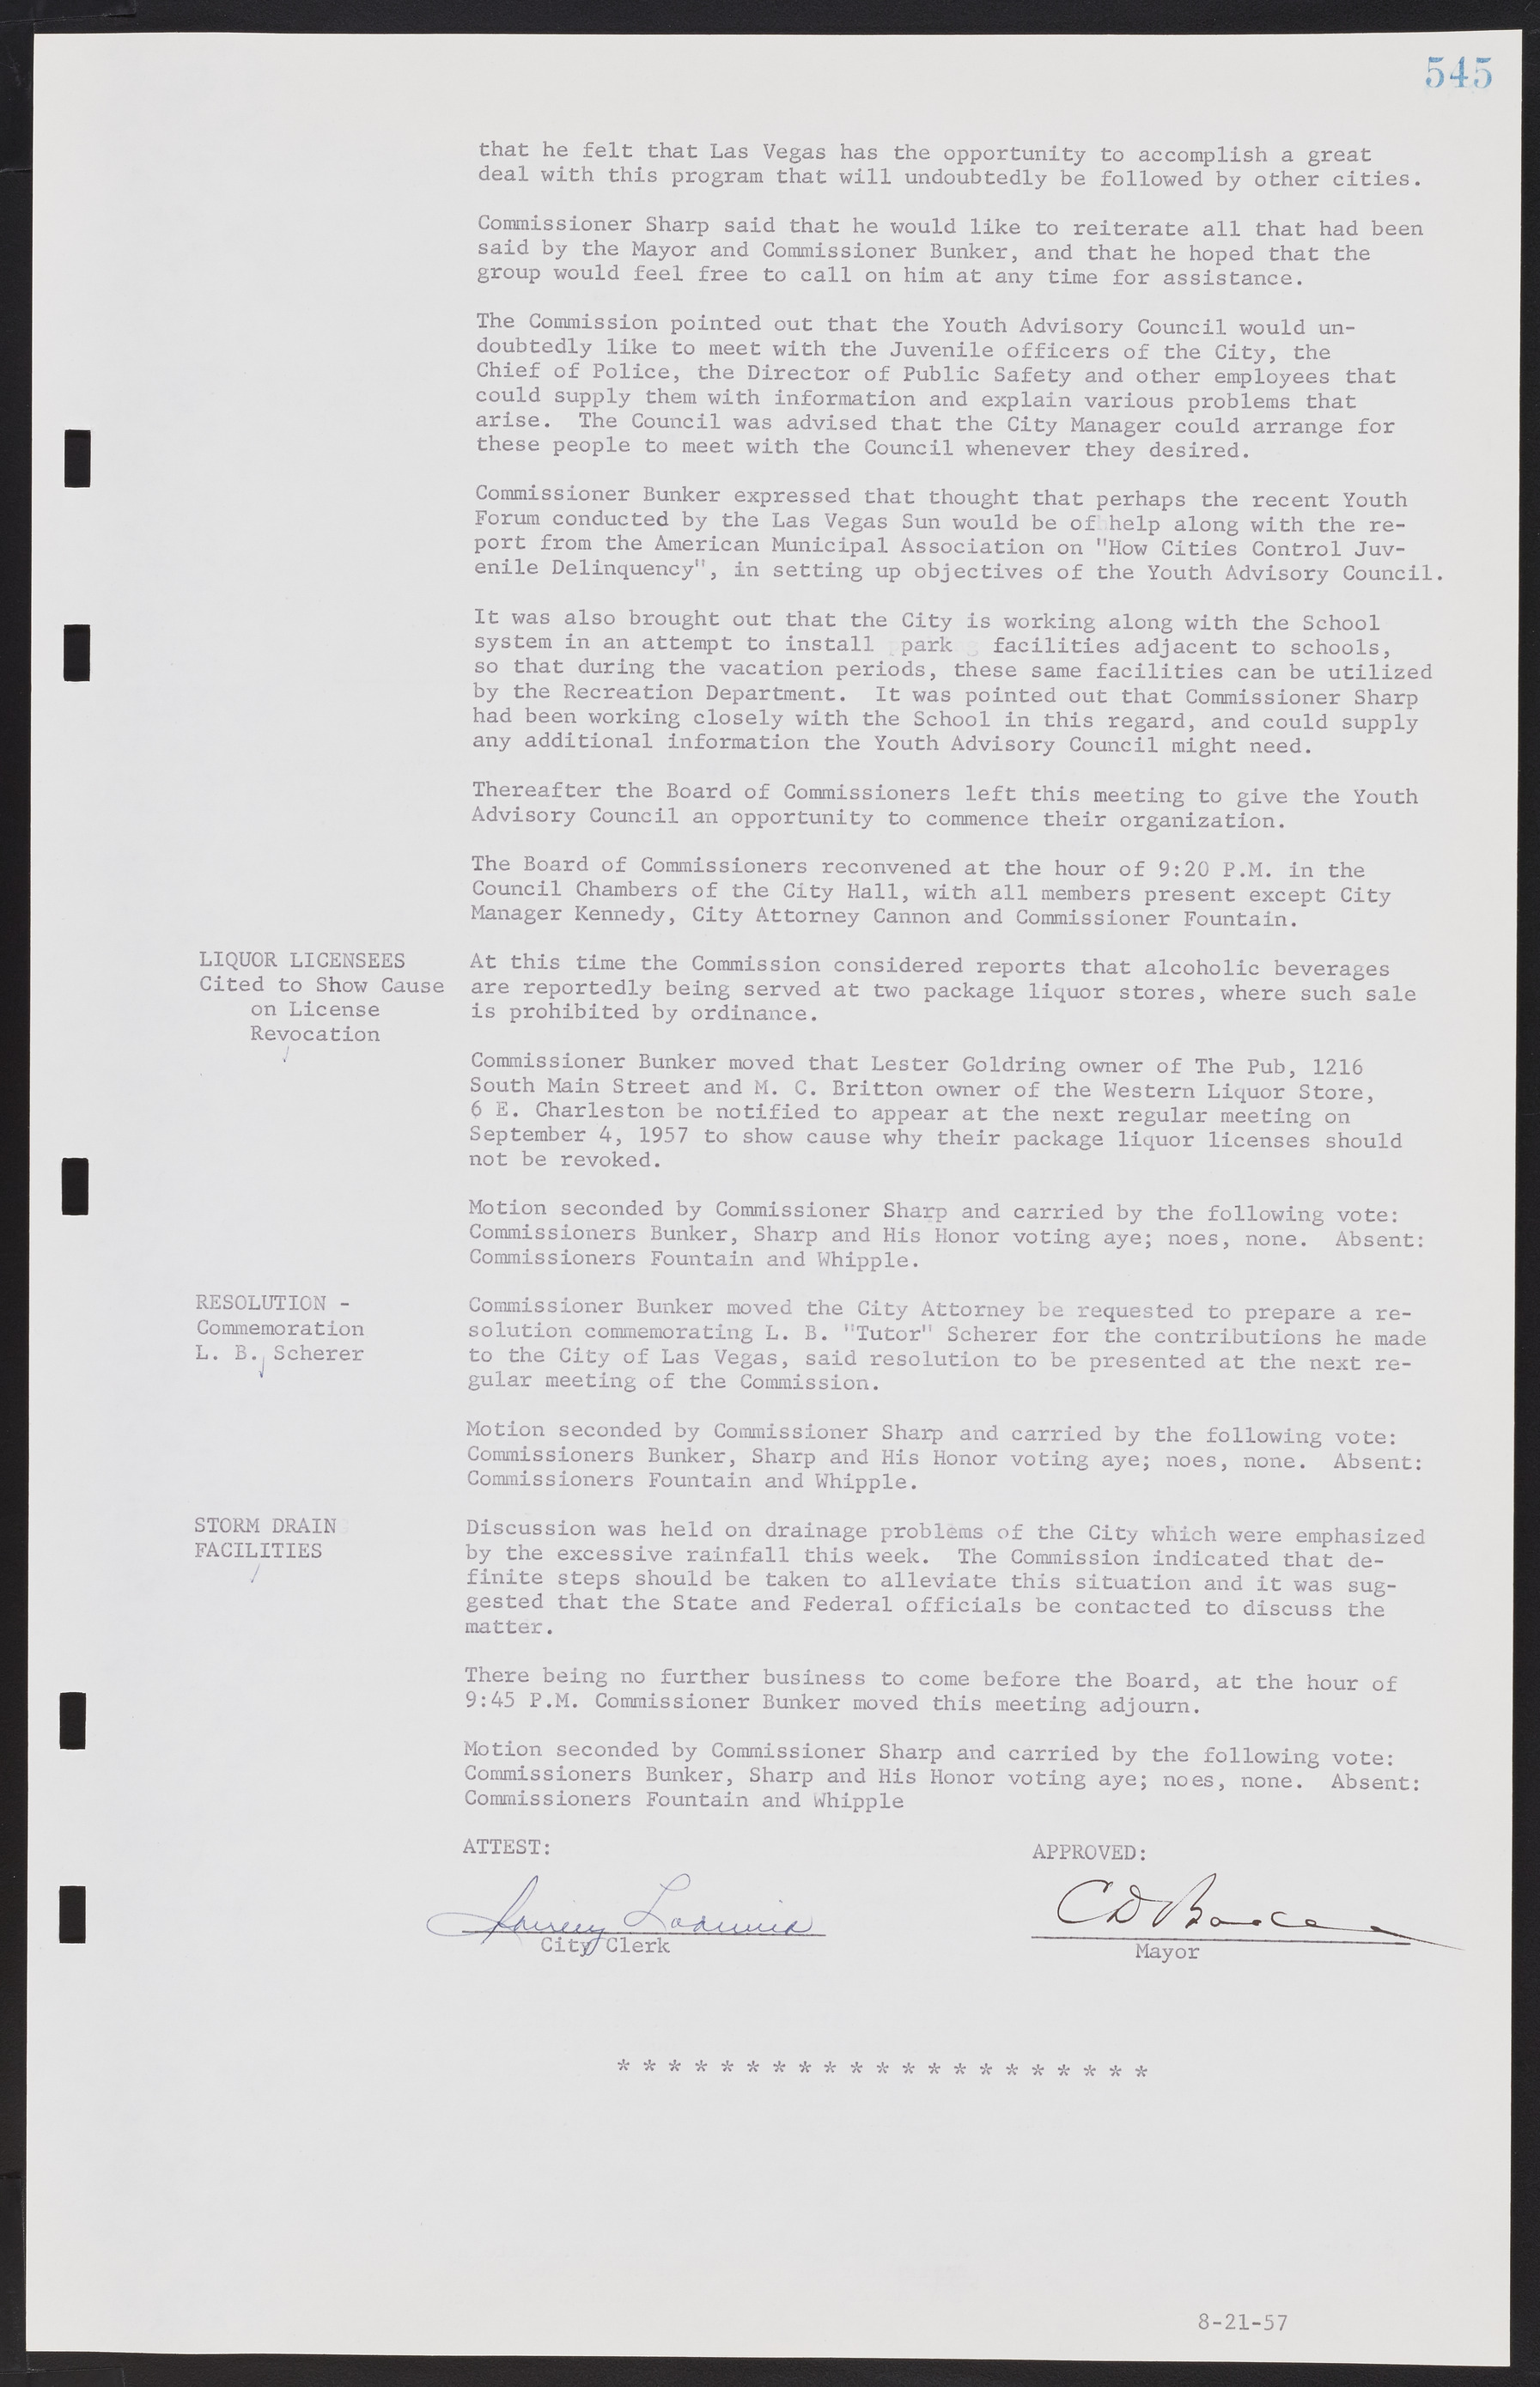 Las Vegas City Commission Minutes, September 21, 1955 to November 20, 1957, lvc000010-565